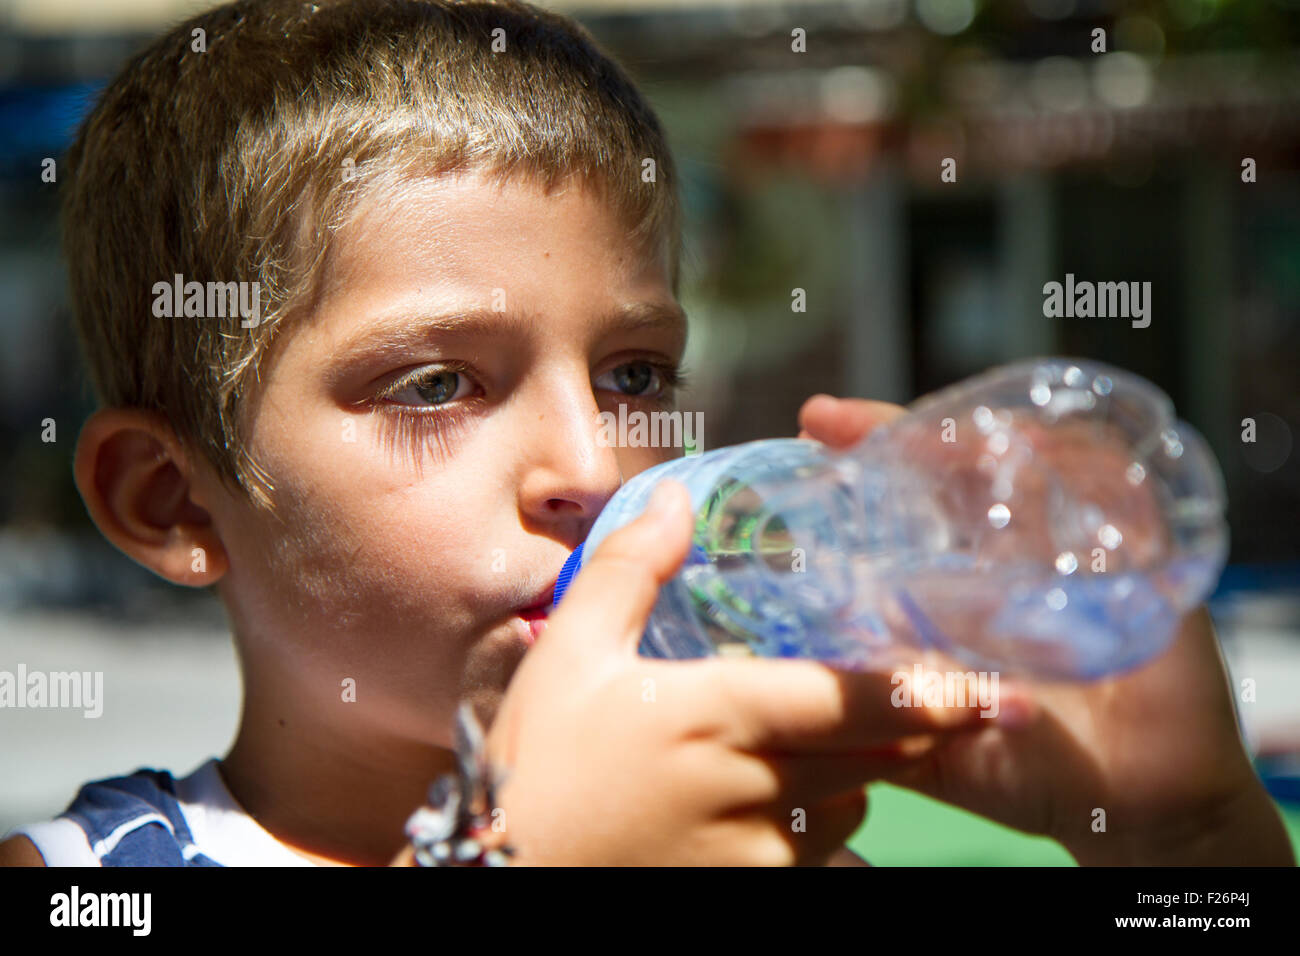 https://c8.alamy.com/comp/F26P4J/summer-portrait-of-child-drinking-a-bottle-of-water-F26P4J.jpg